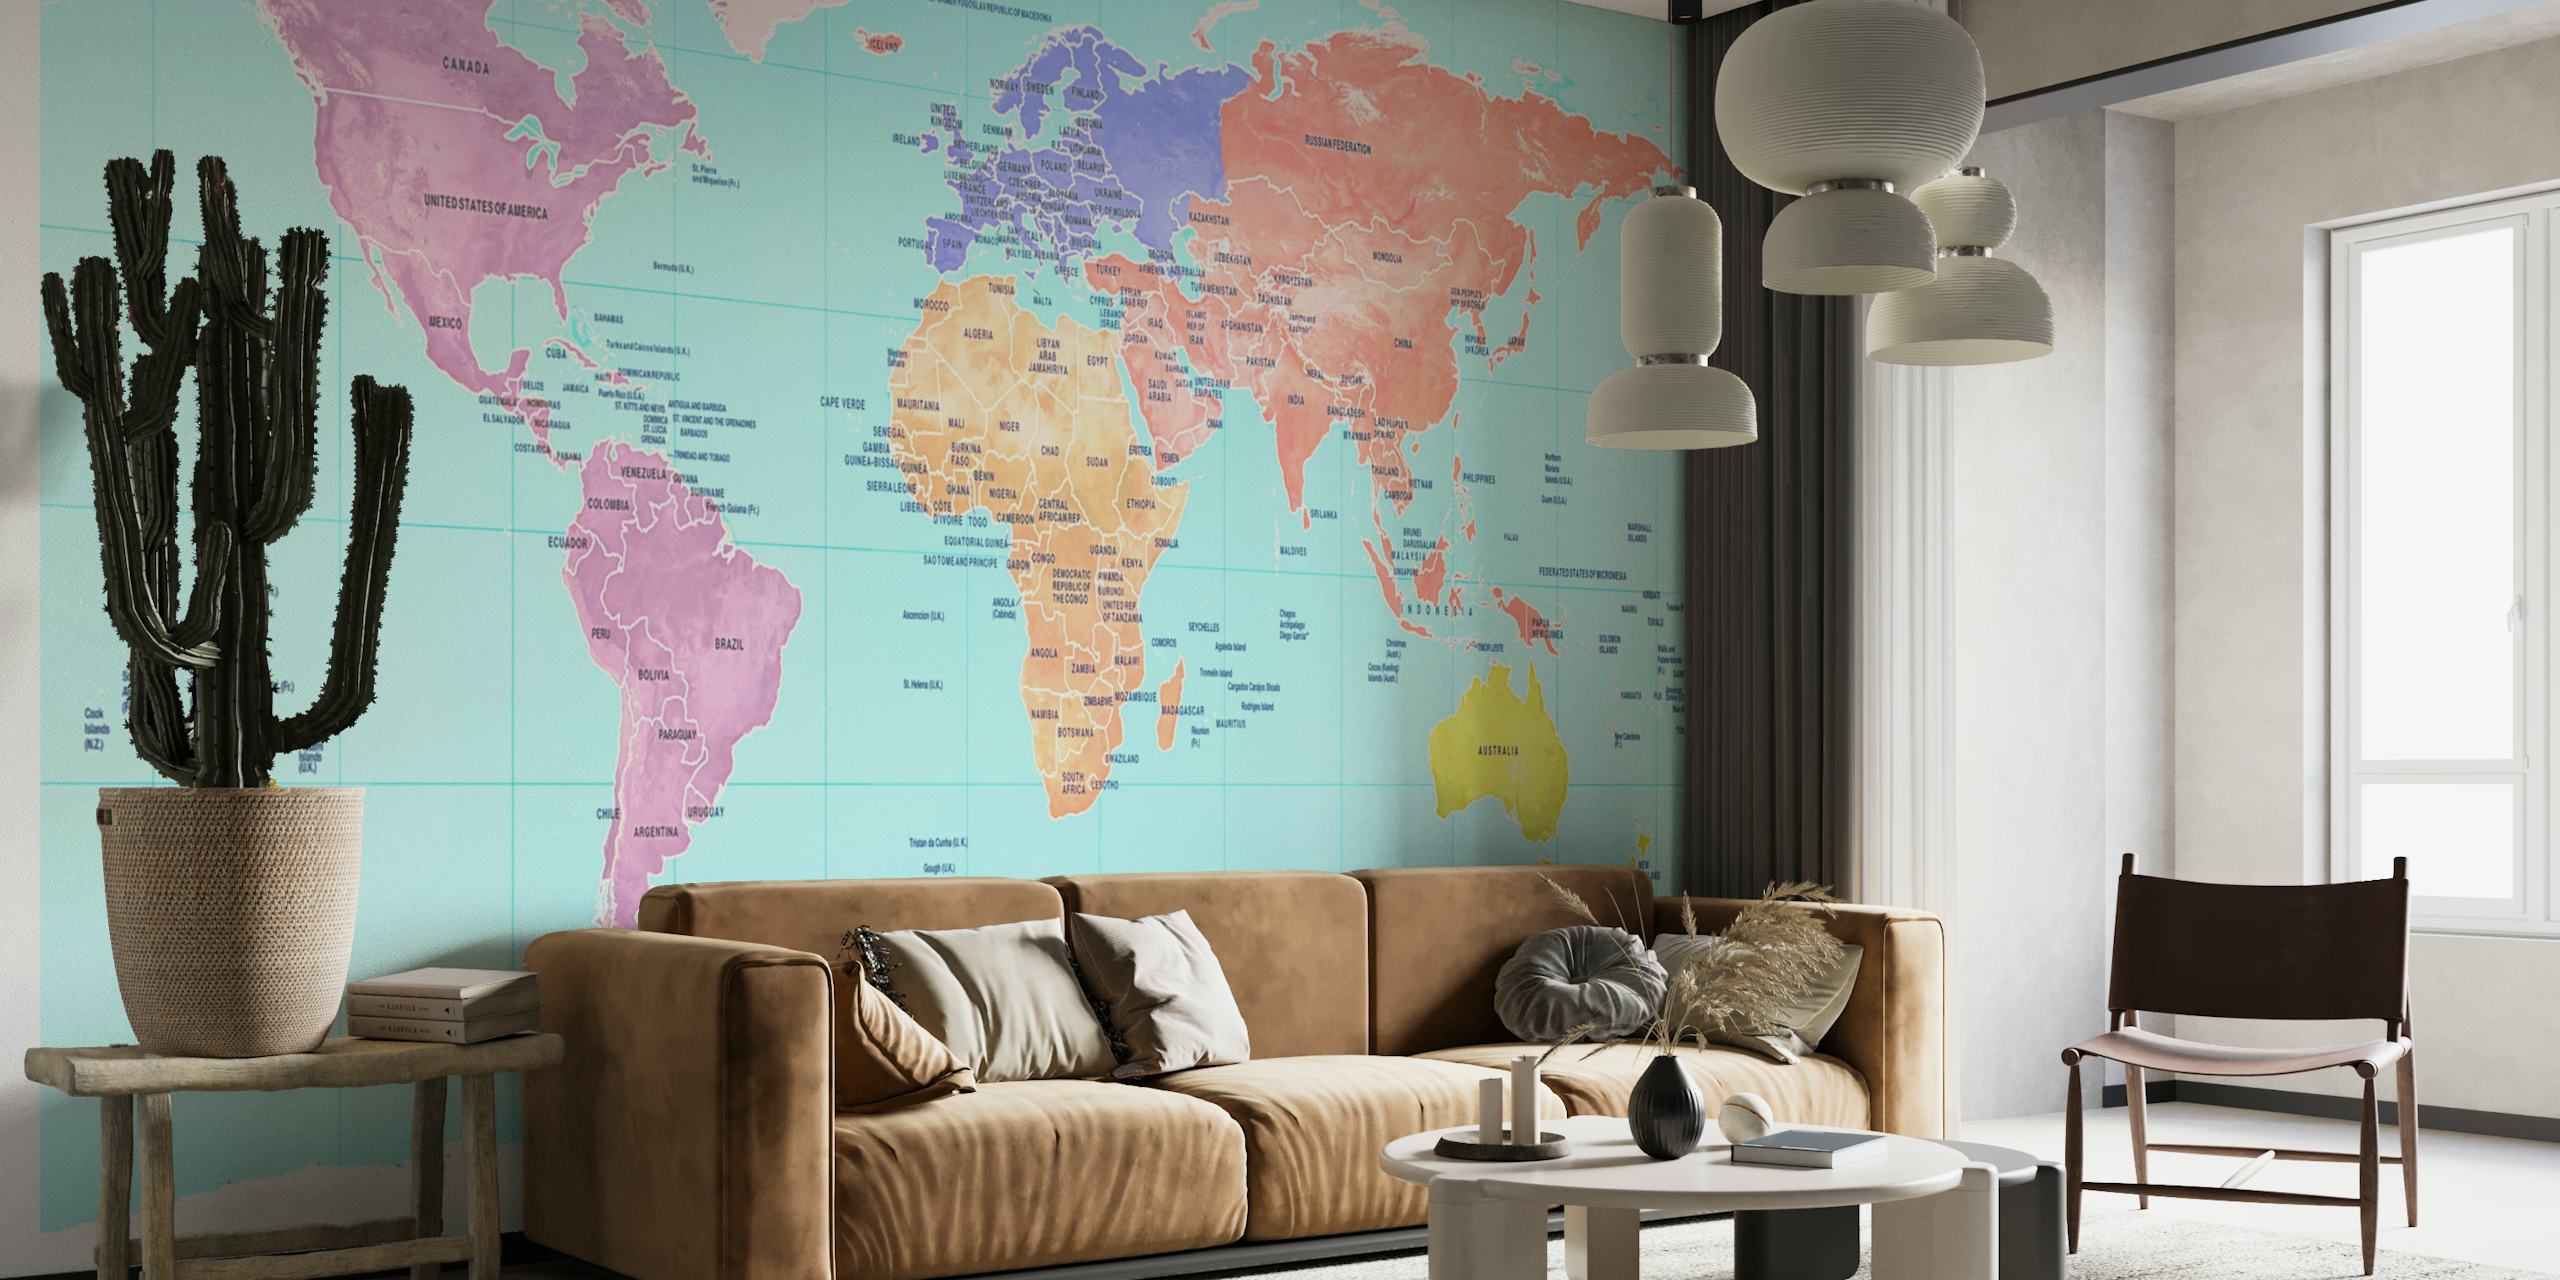 Colorido mural de pared con un mapamundi que muestra continentes en diferentes tonos